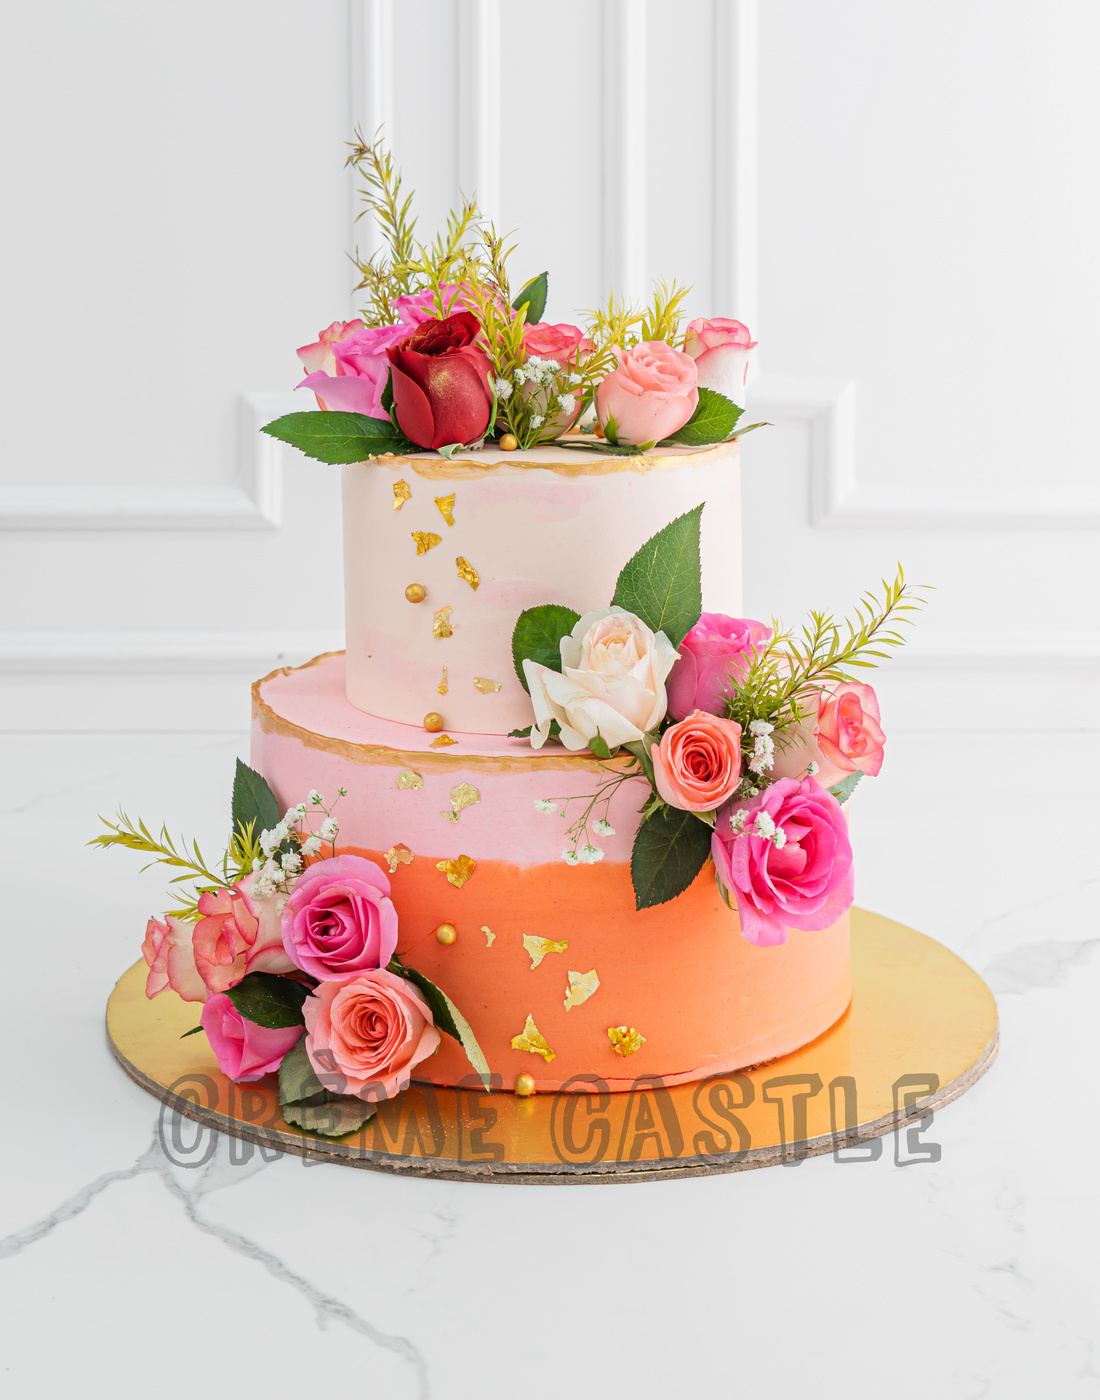 Over the Top Wedding Cakes | BizBash